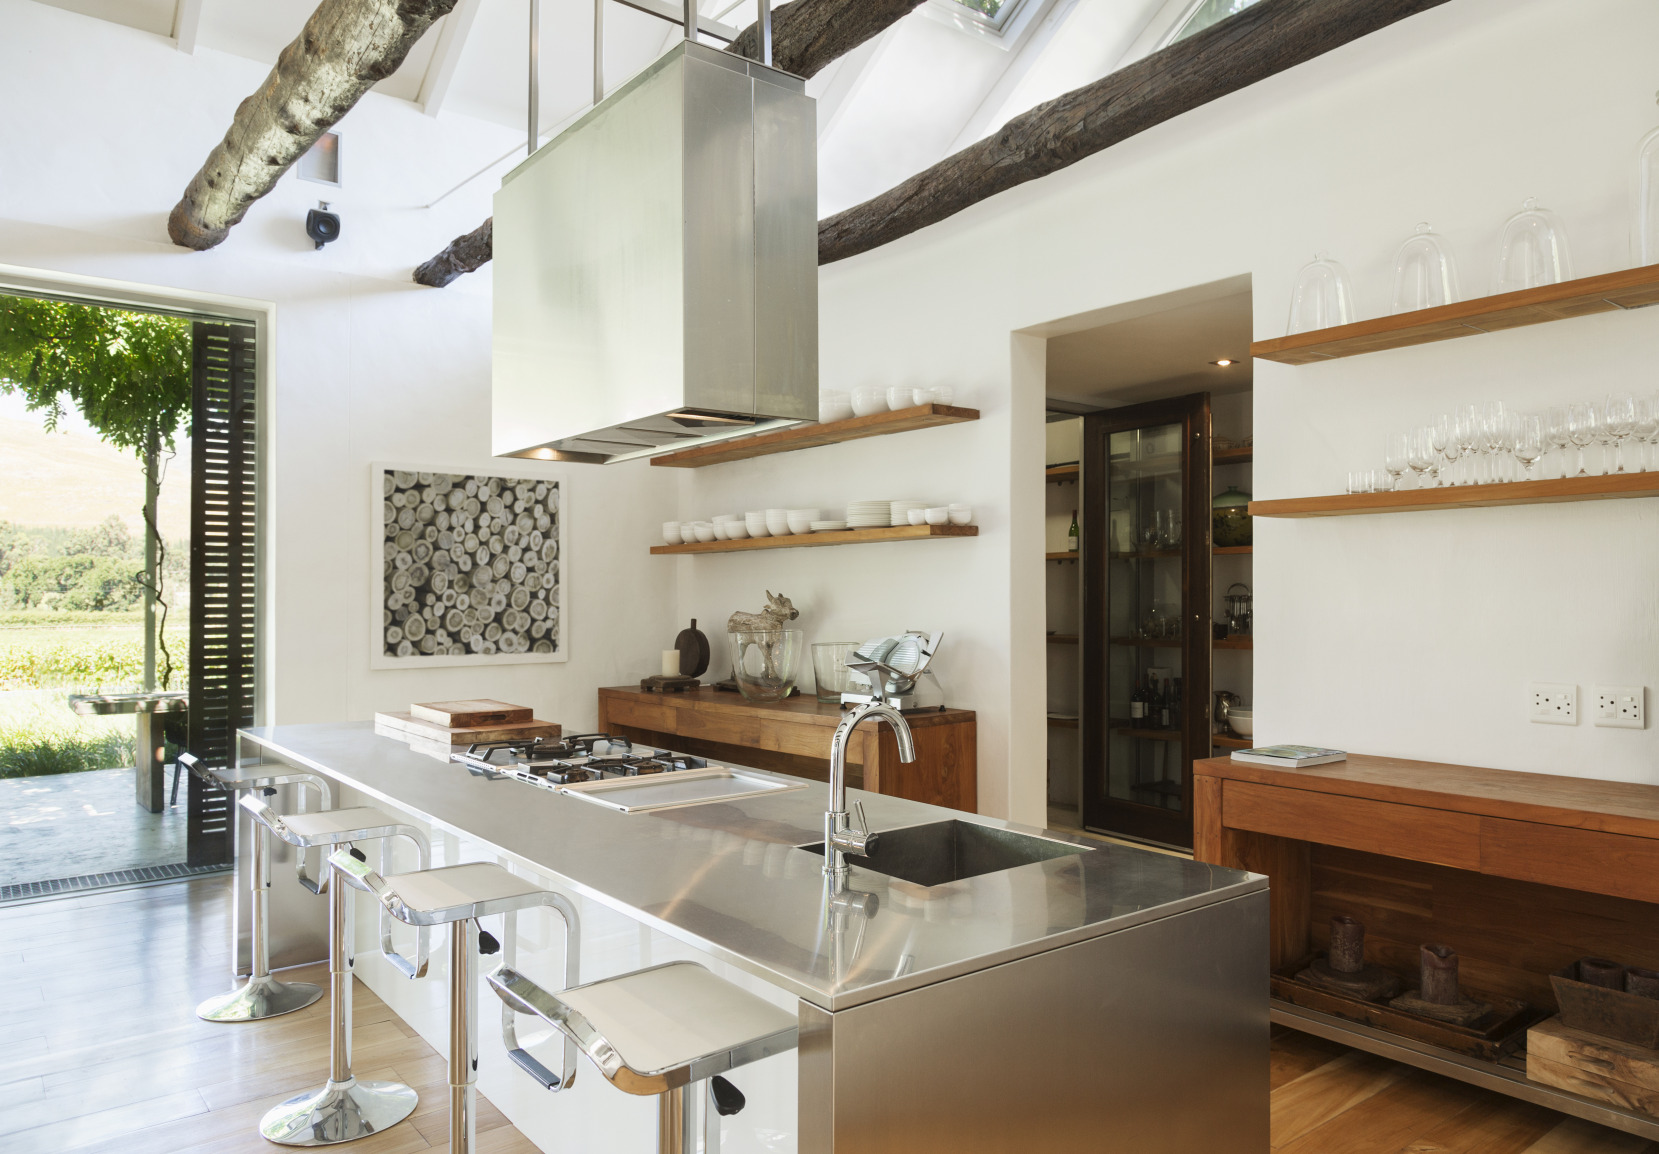 Luxurious kitchen with metallic finishes